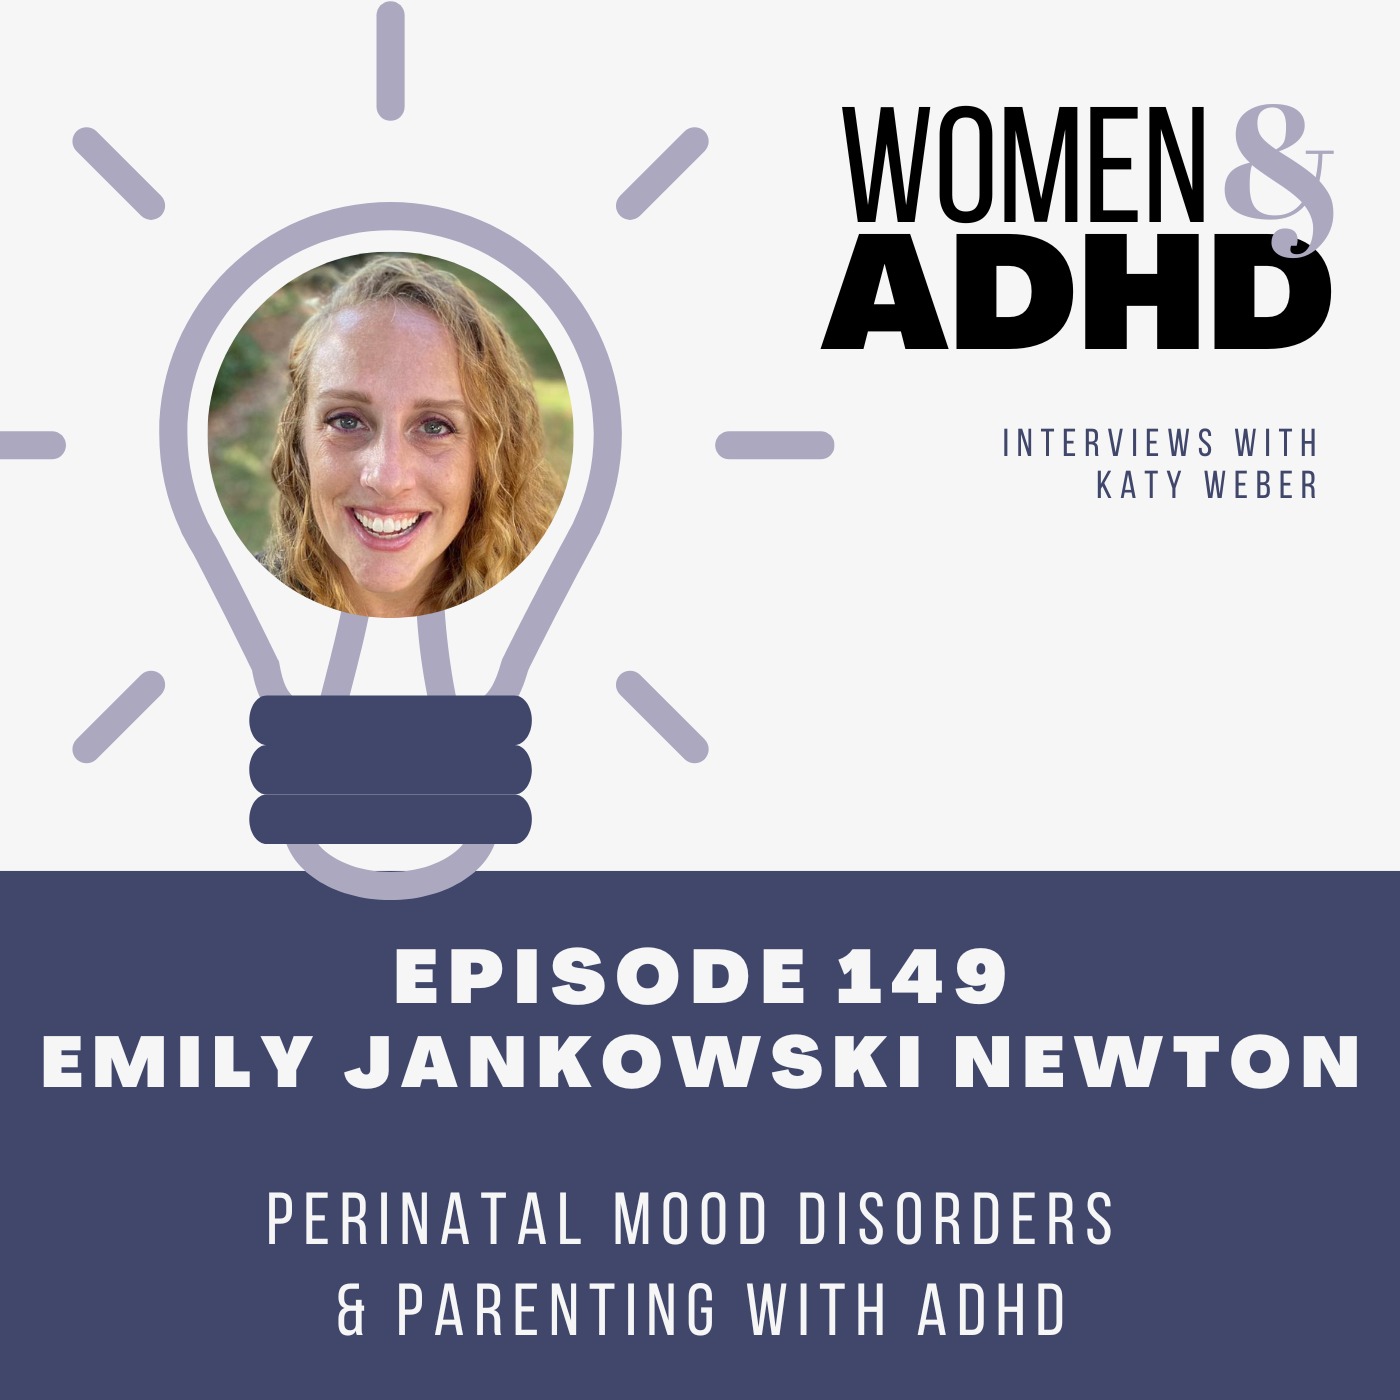 Emily Jankowski Newton: Perinatal mood disorders & parenting with ADHD